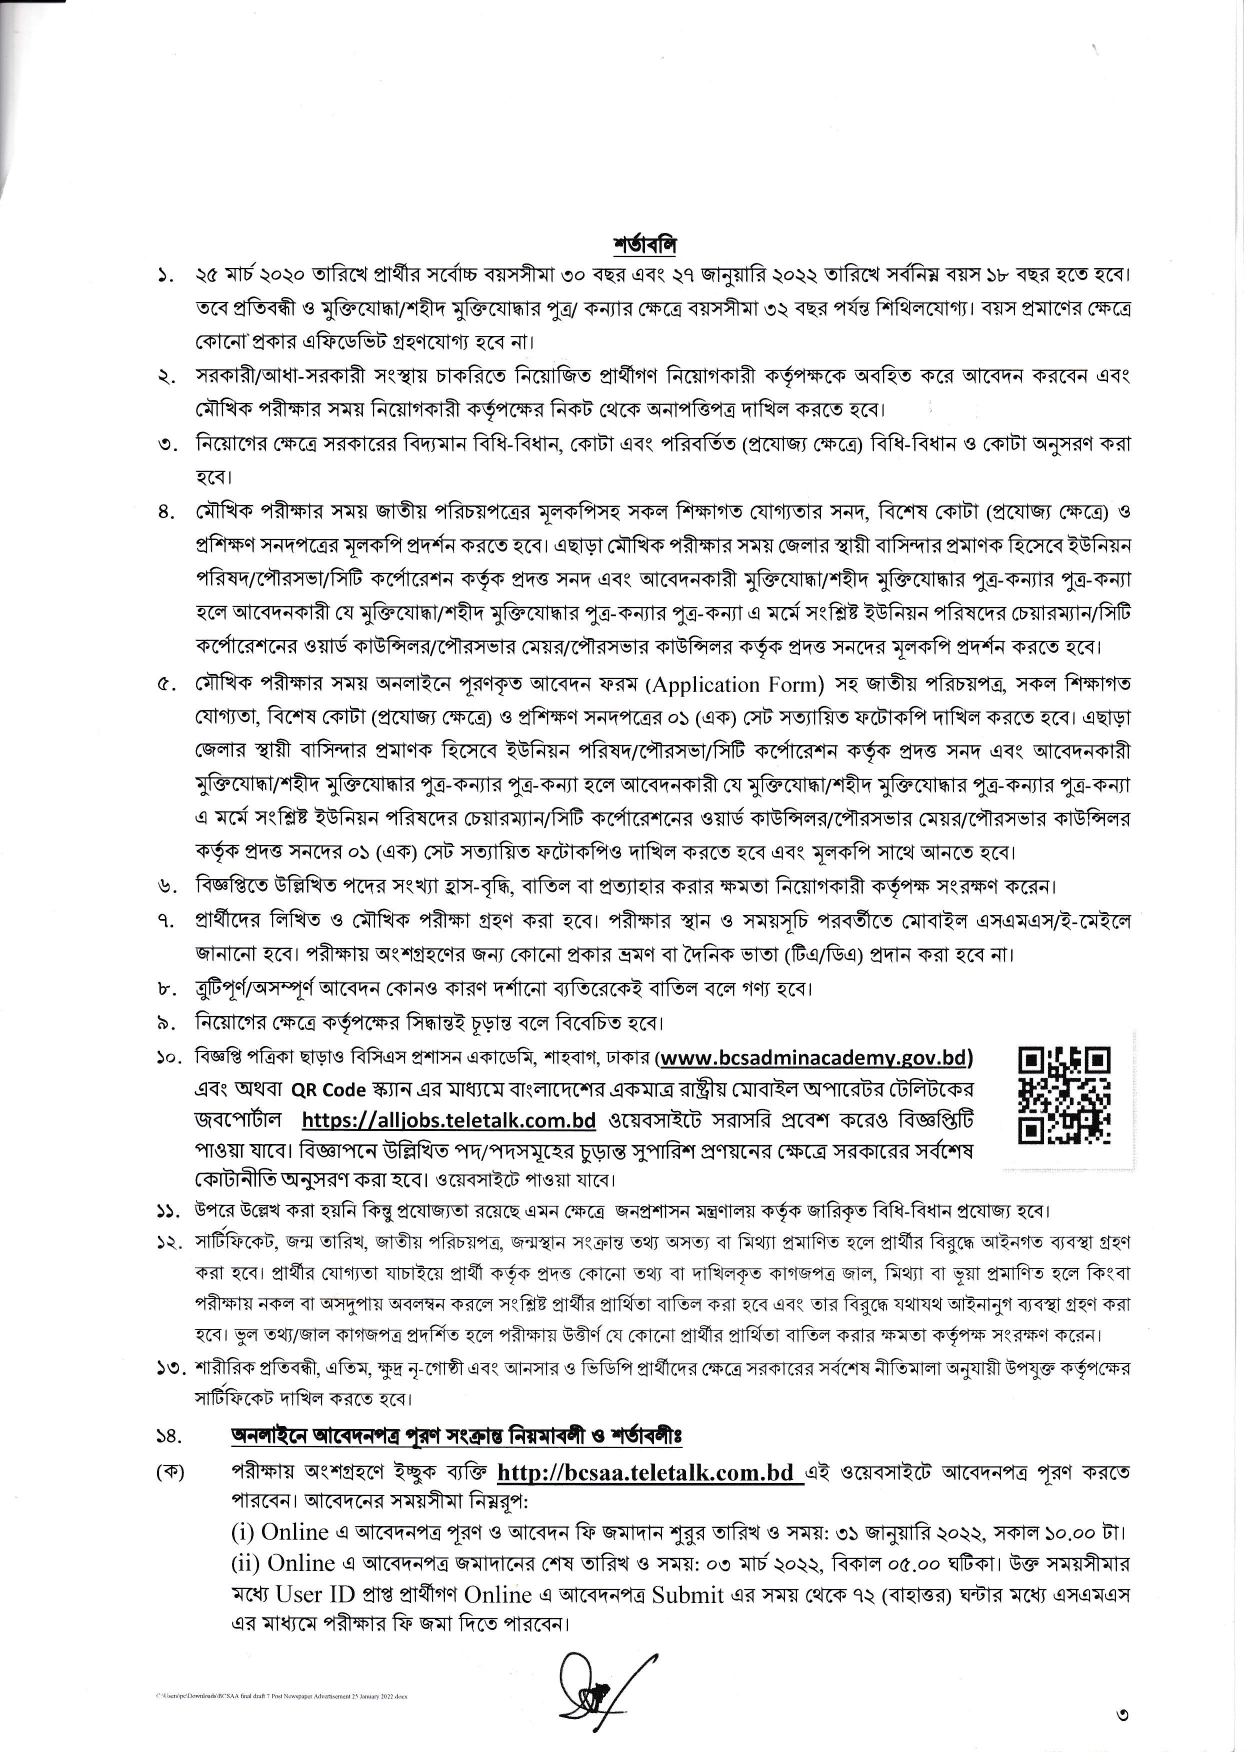 Bangladesh Civil Service Administration Academy Job Circular